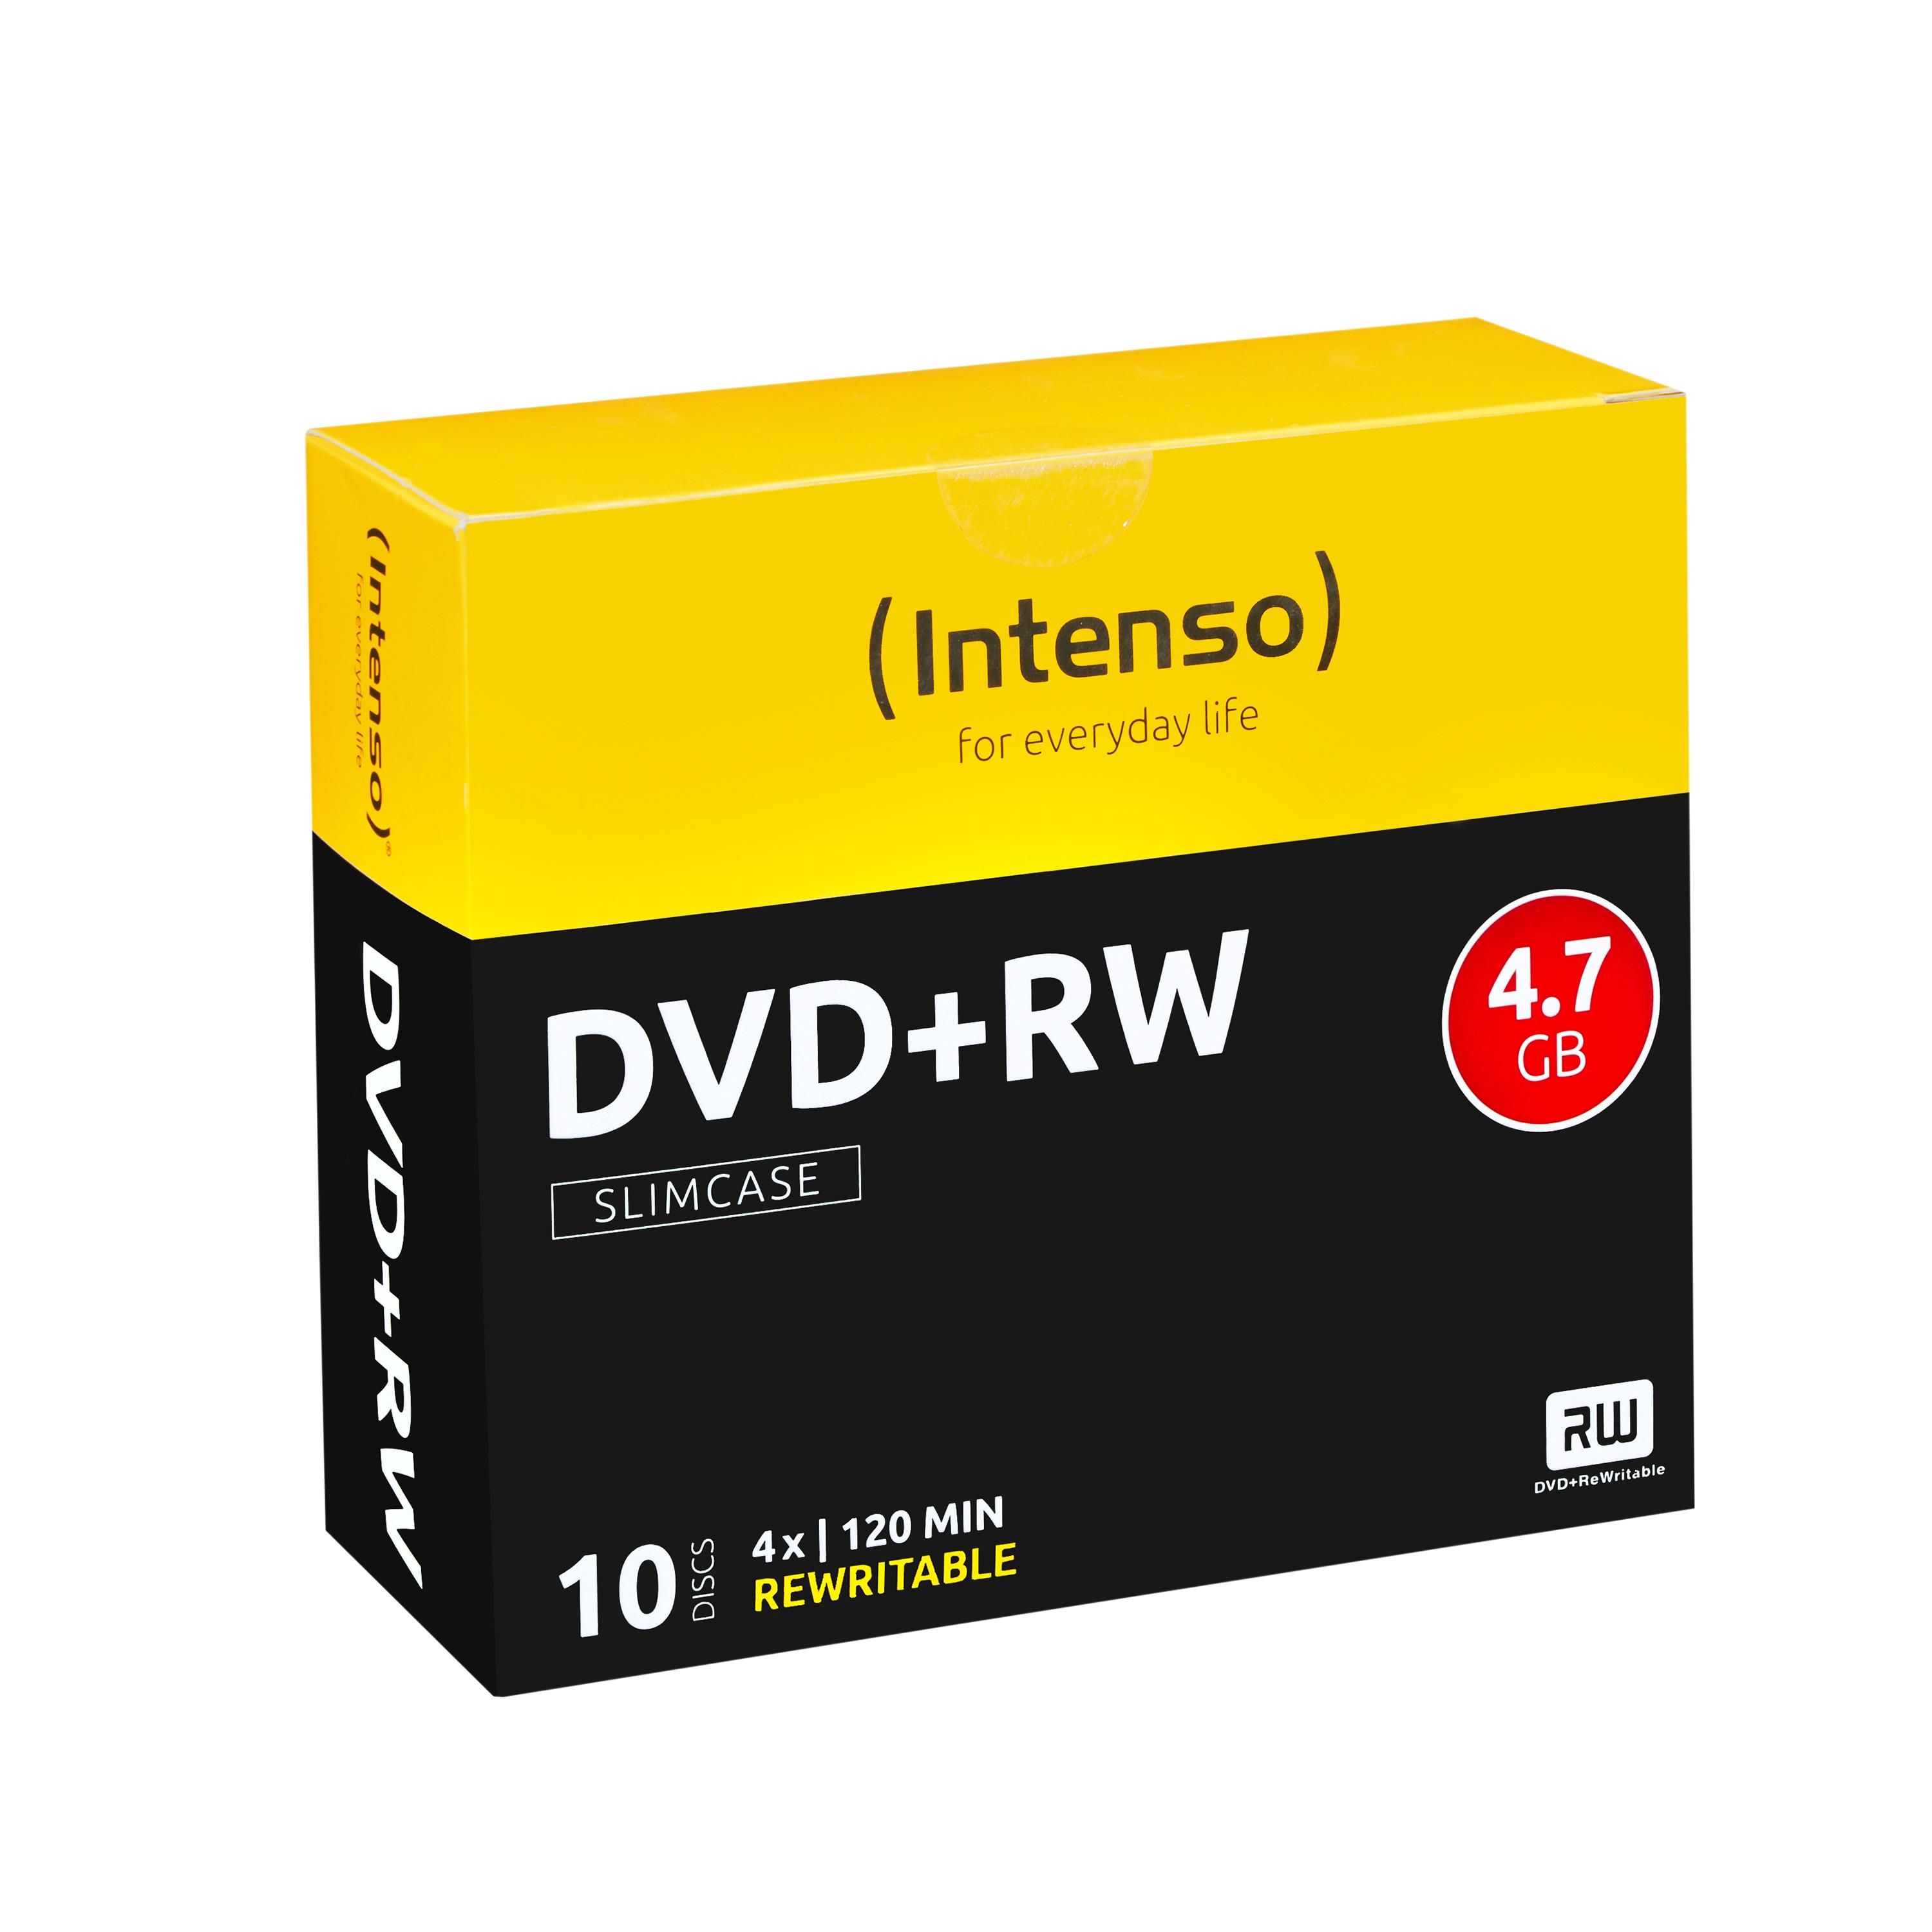 Intenso Dvd+rw 4,7gb 10pcs